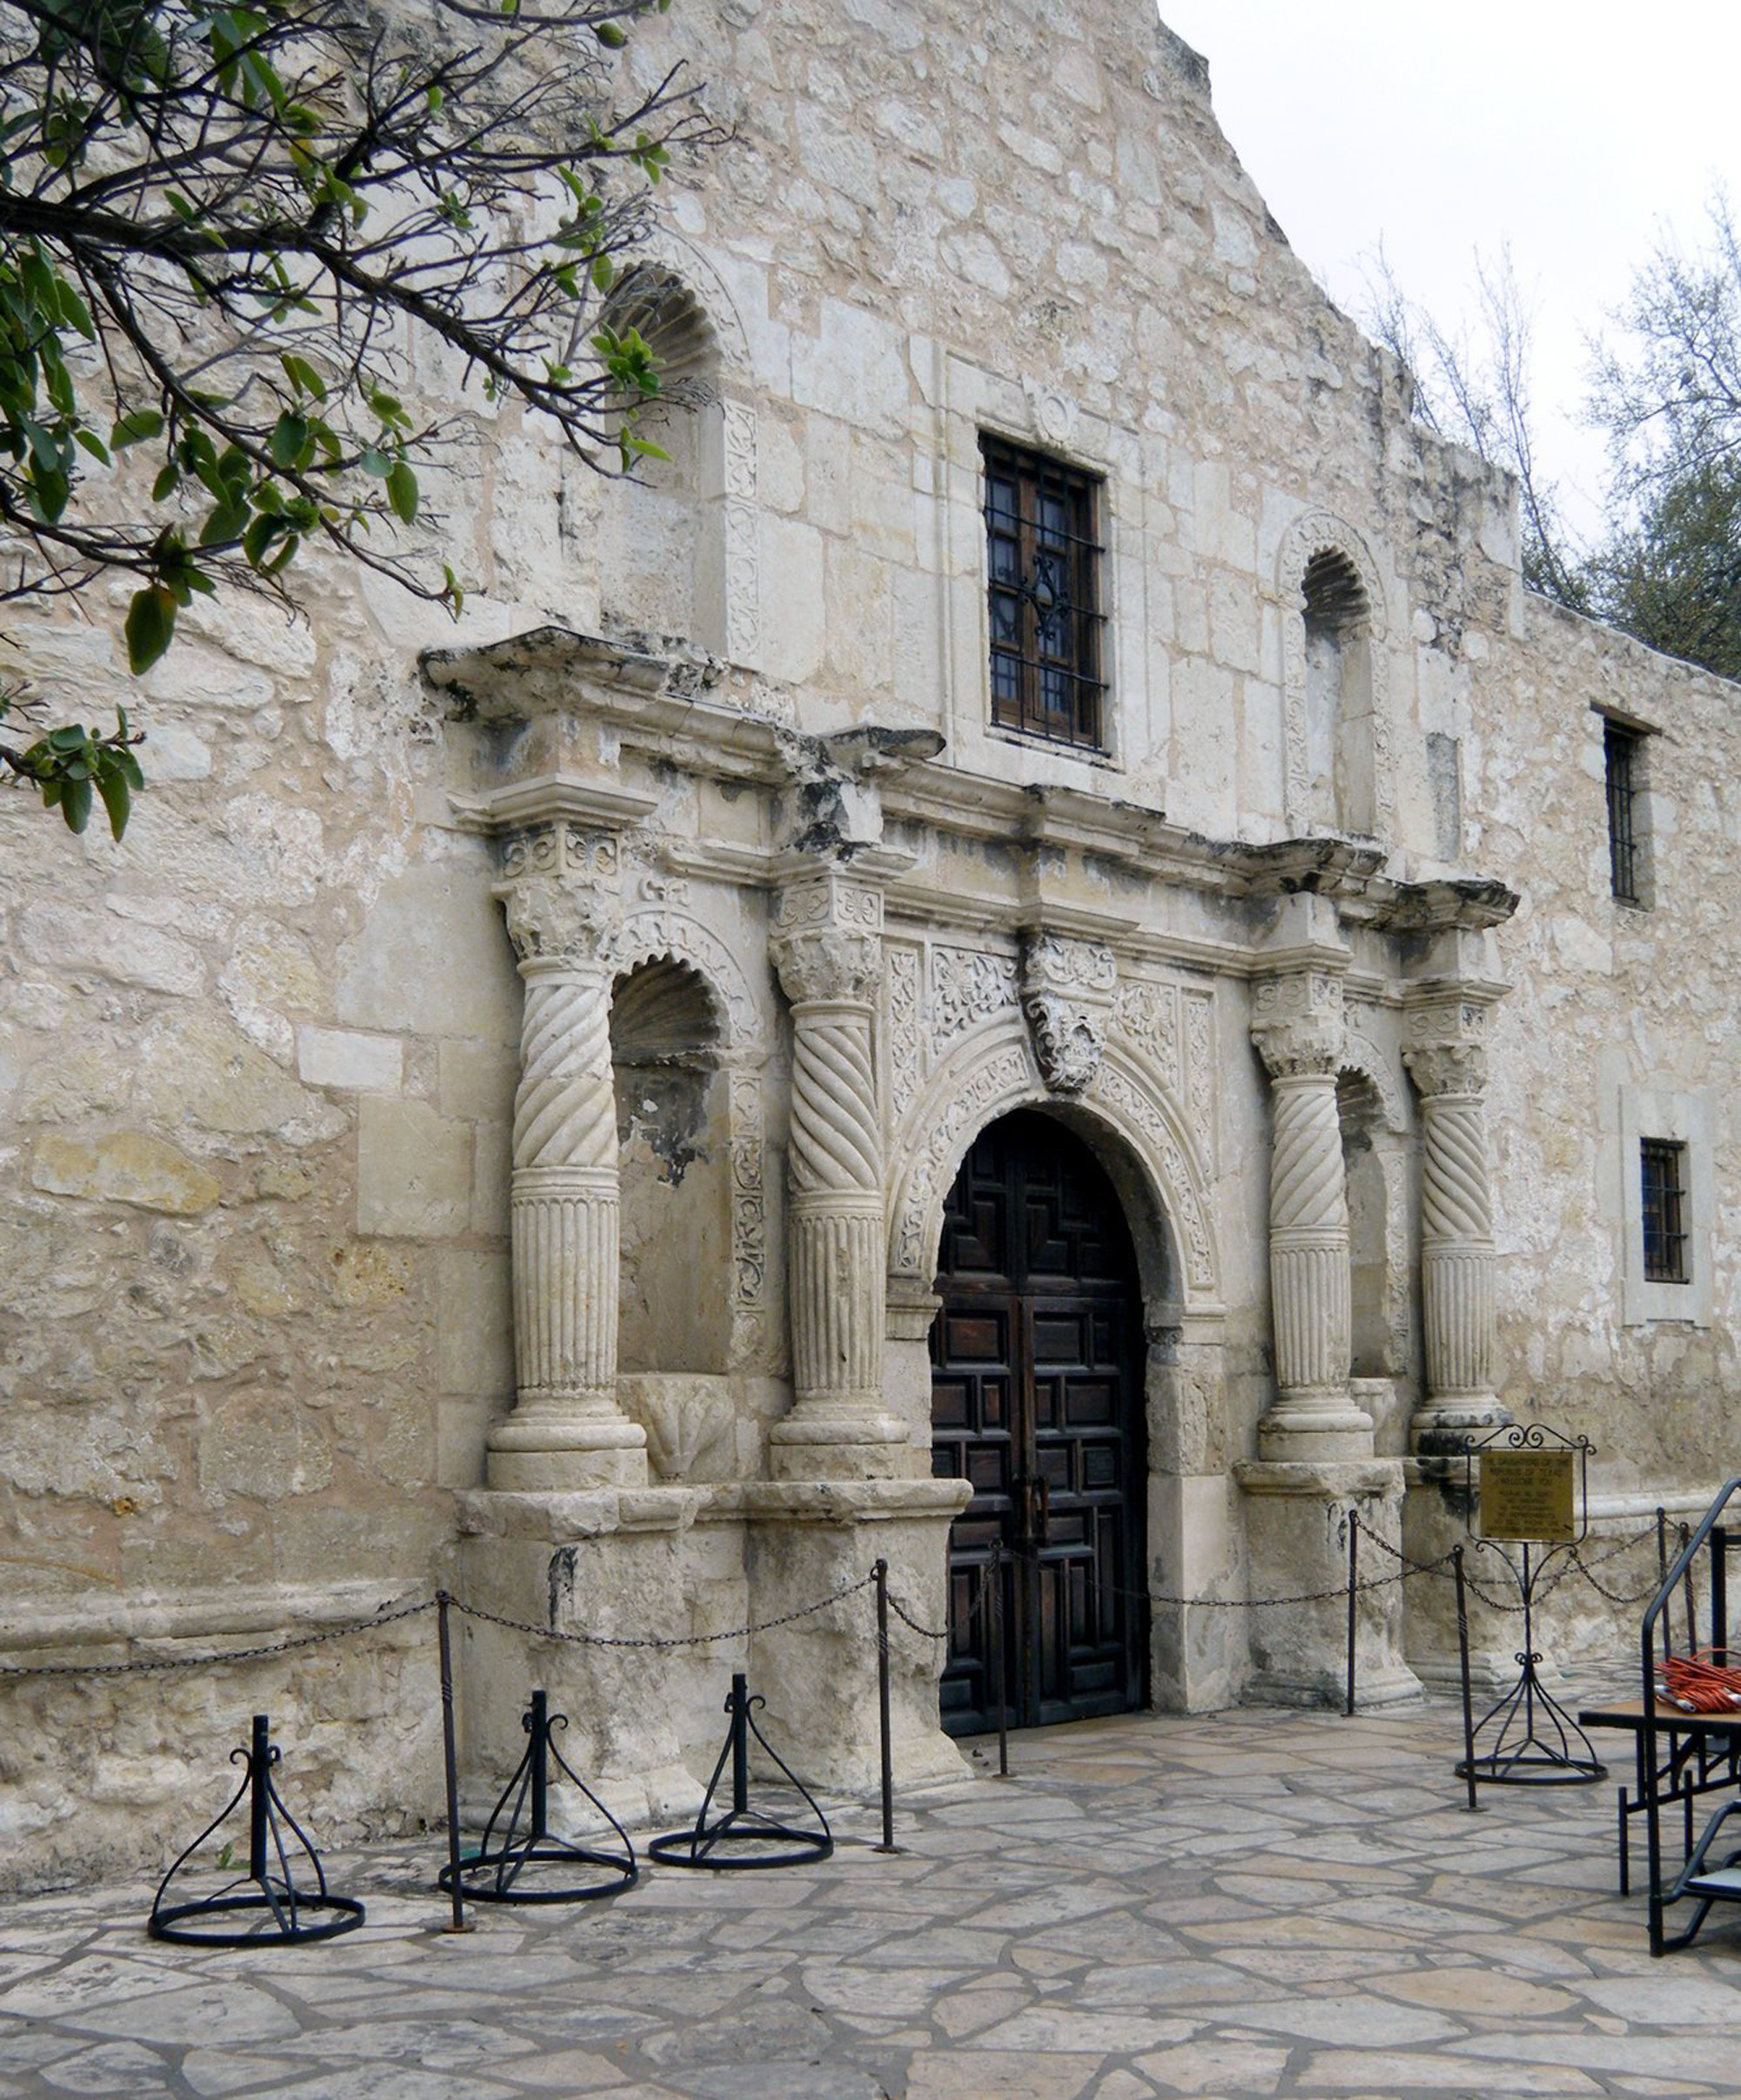 Alamo, shops, food highlight San Antonio trip - The Blade